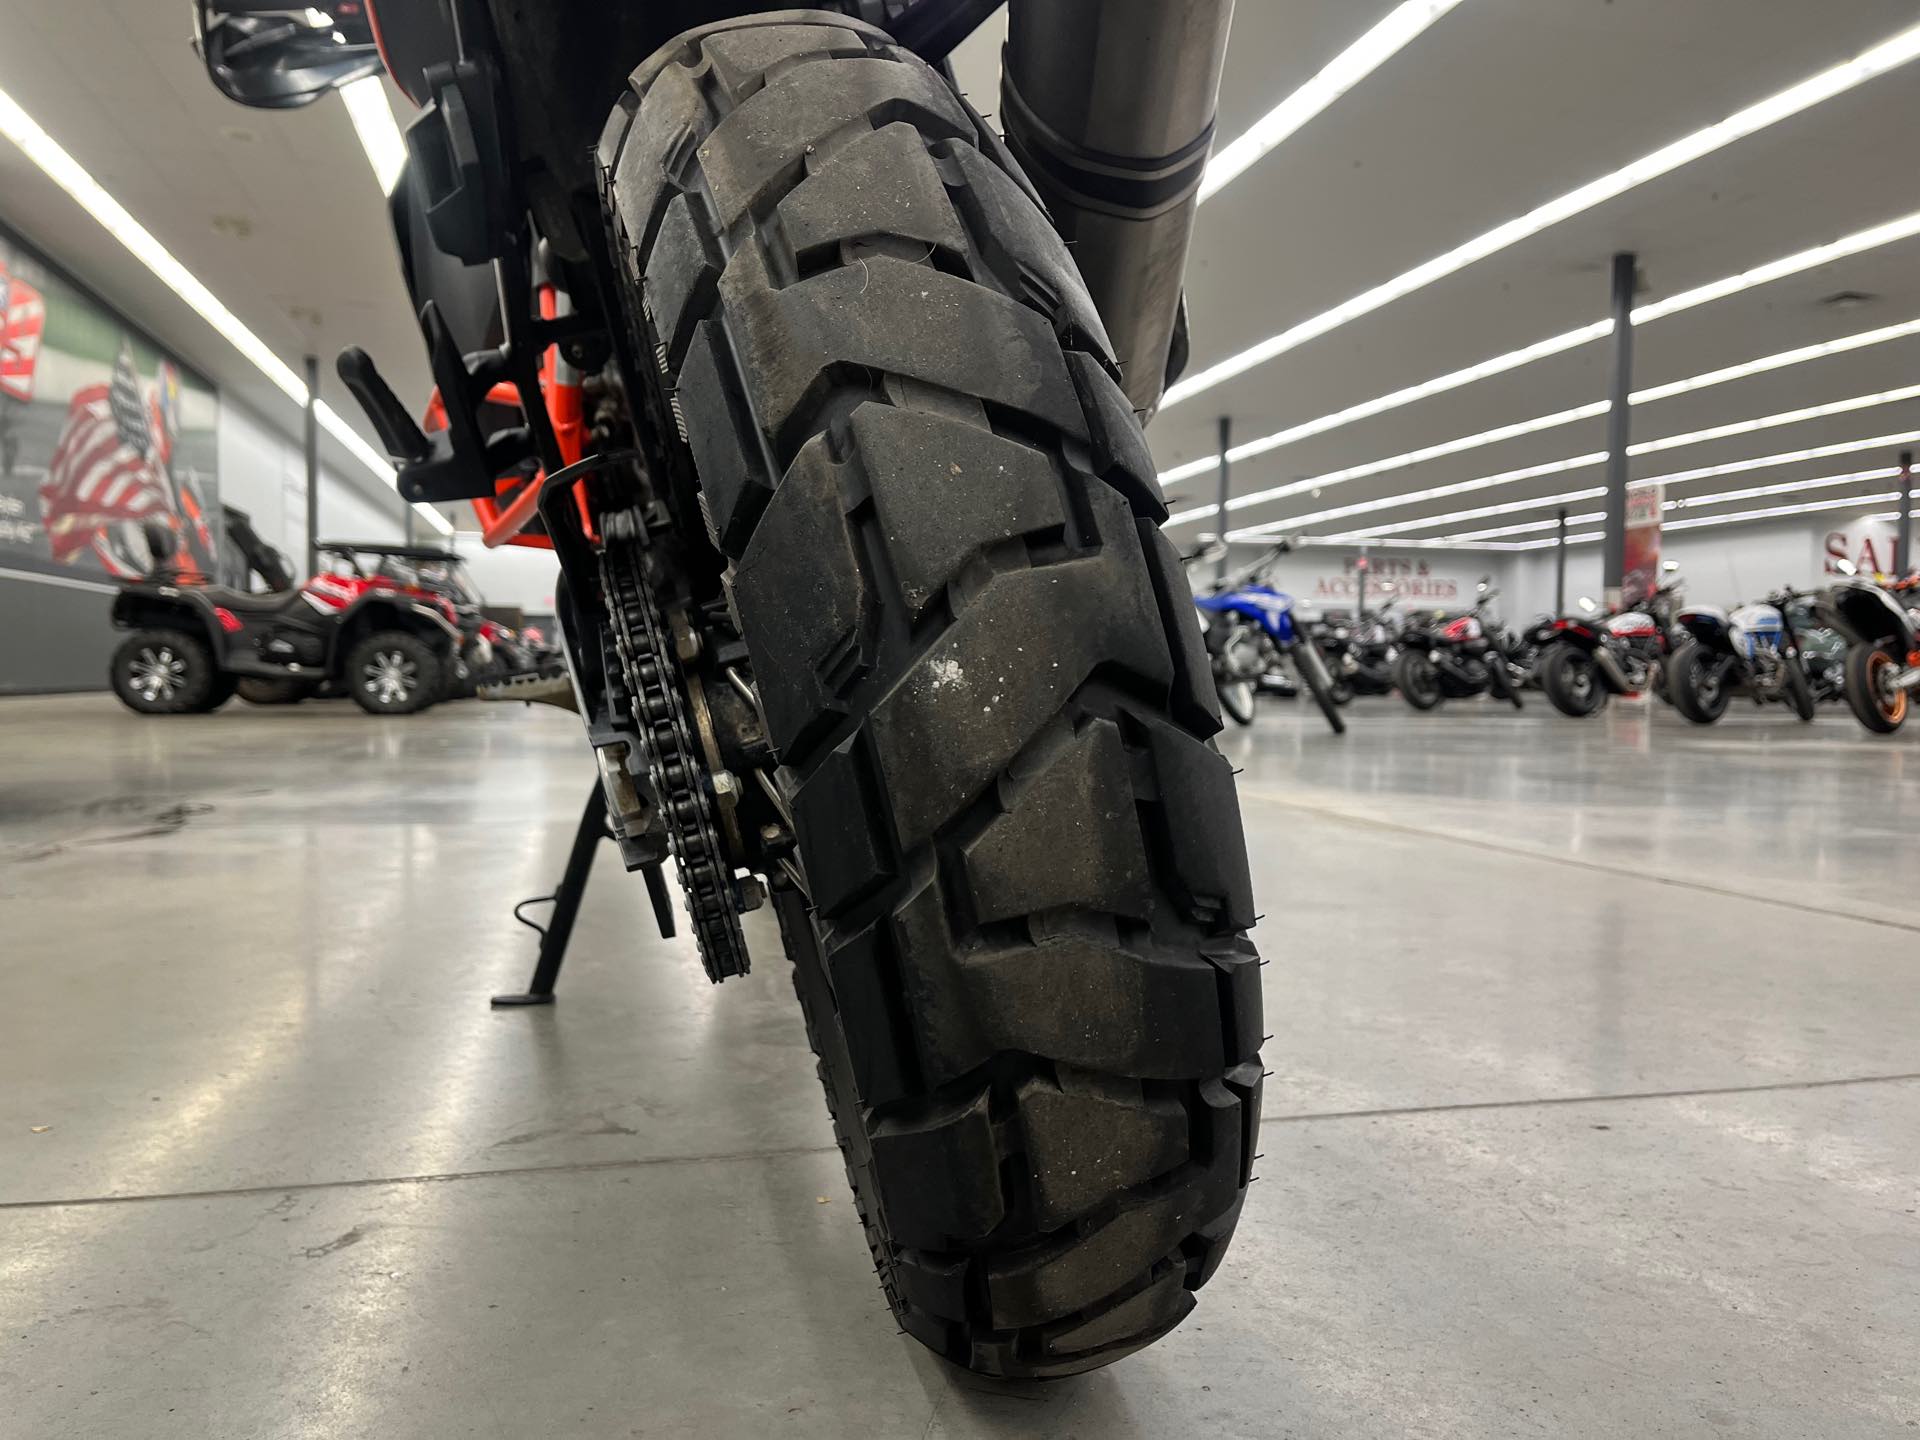 2019 KTM Adventure 1090 R at Aces Motorcycles - Denver